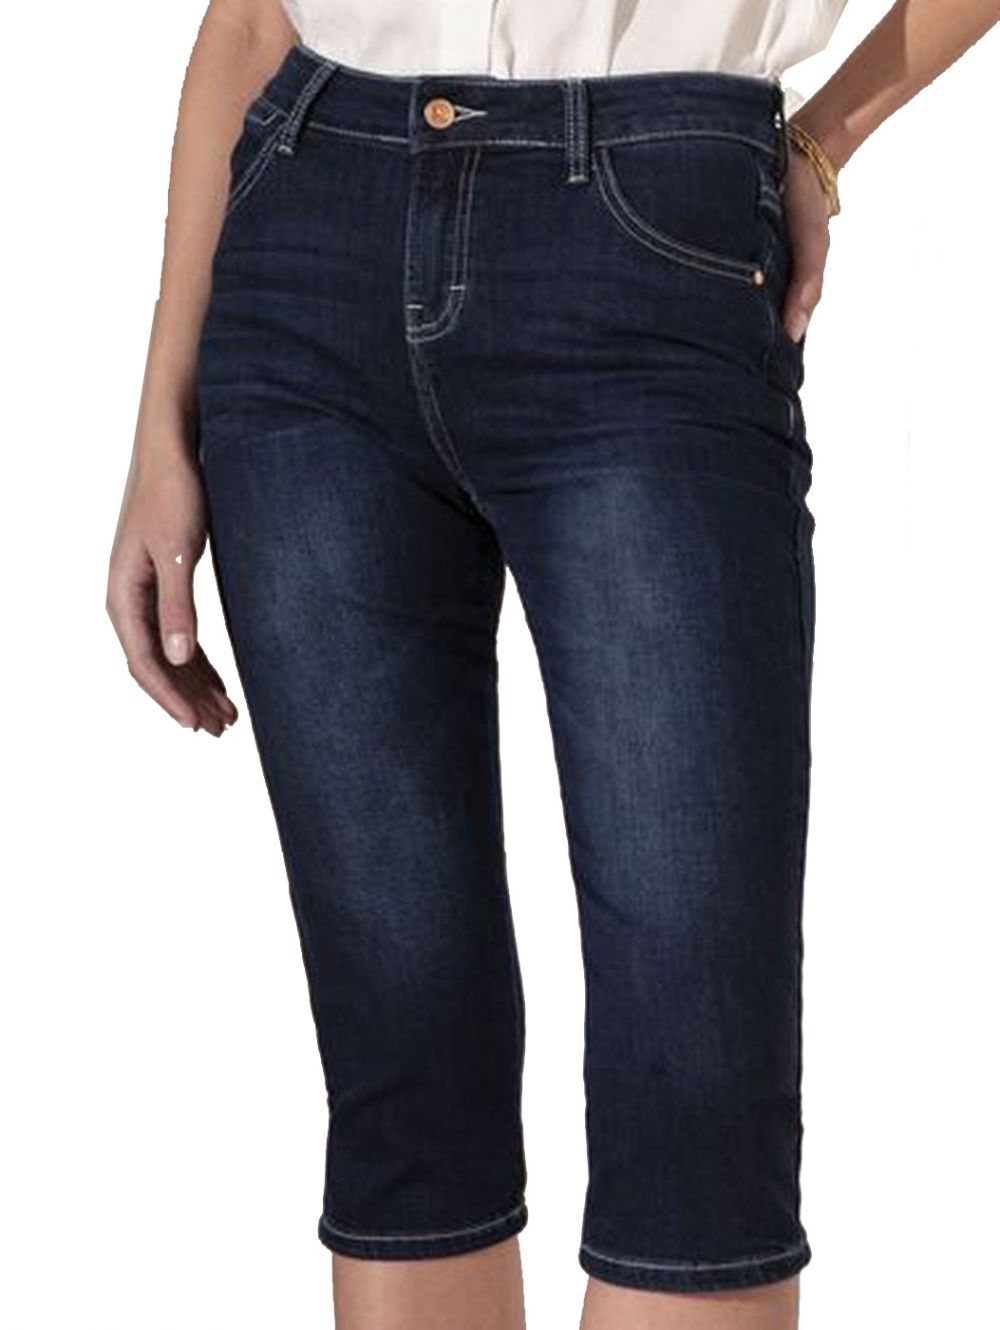 Rock Revival NWOT Women's Avery Capri Jeans //Size 29 | Women, Capri jeans,  Rock revival